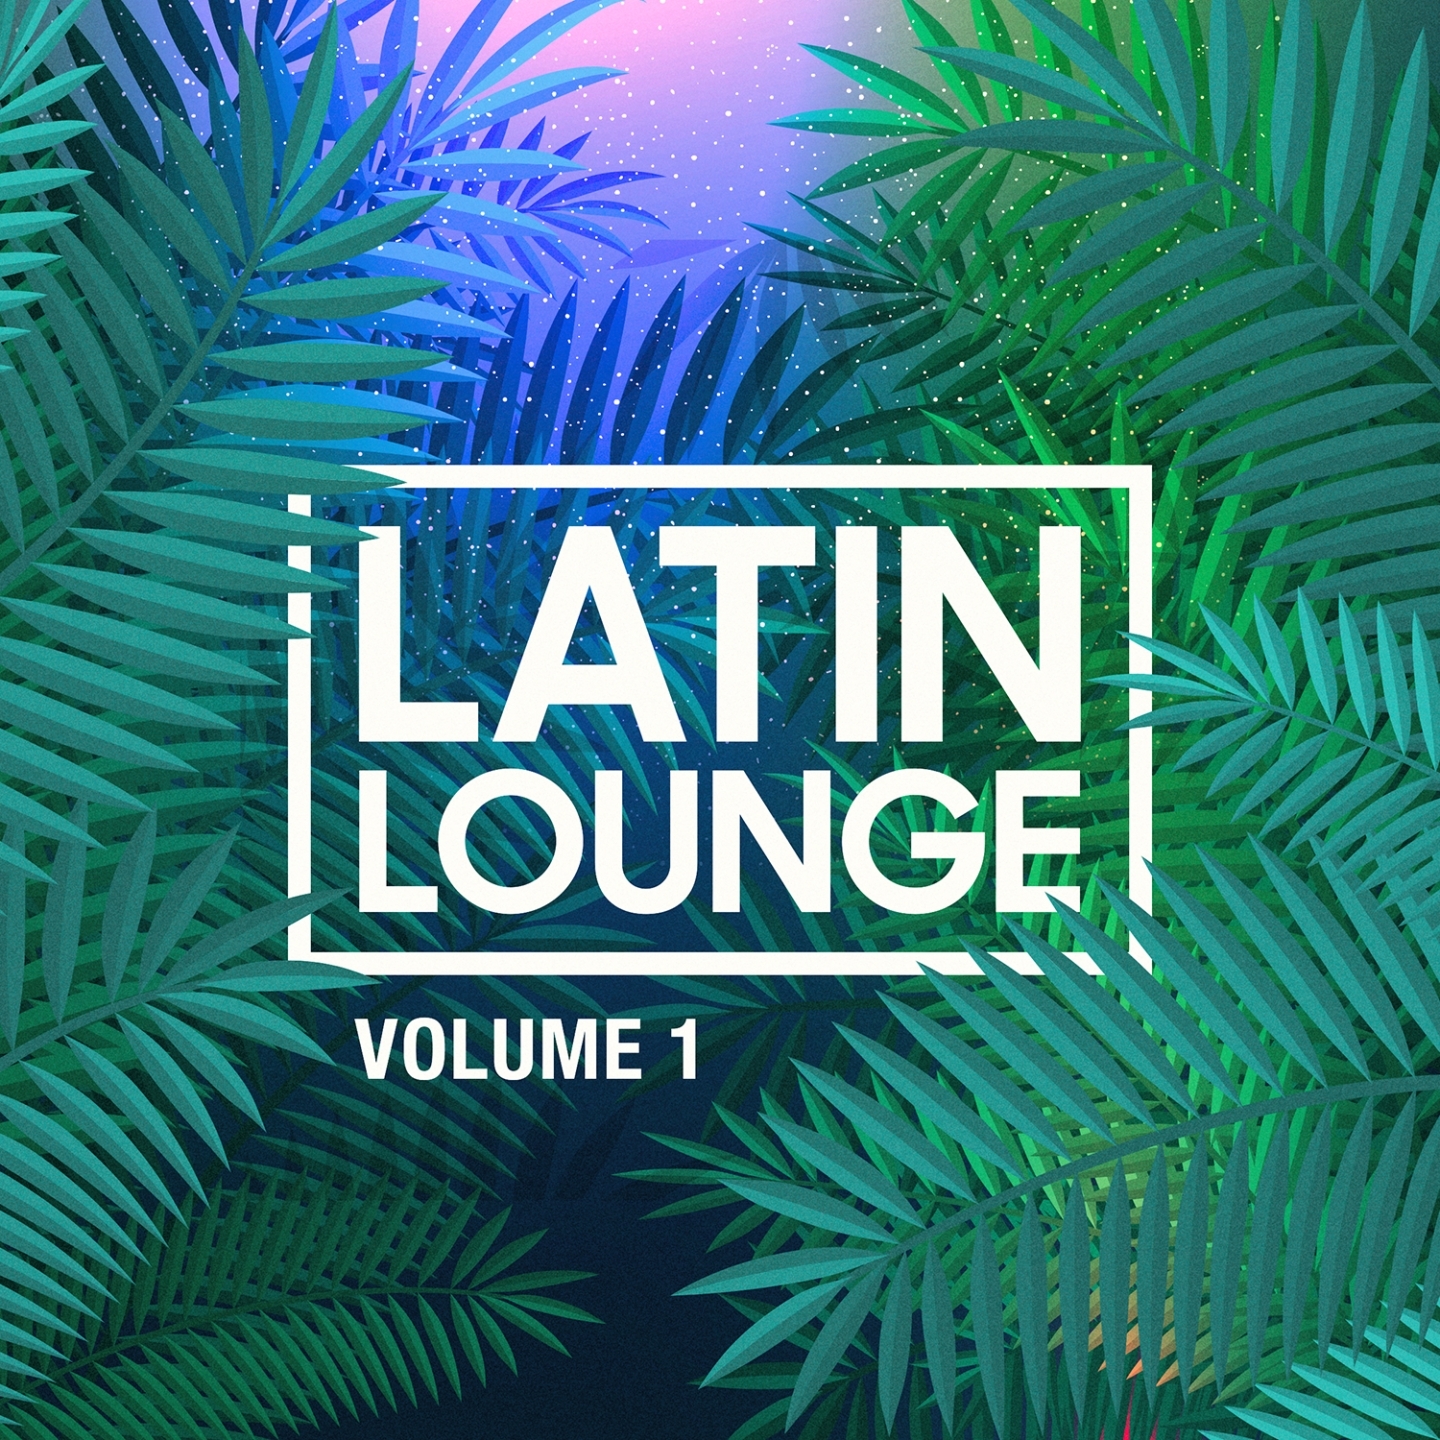 Latin Lounge, Vol. 1